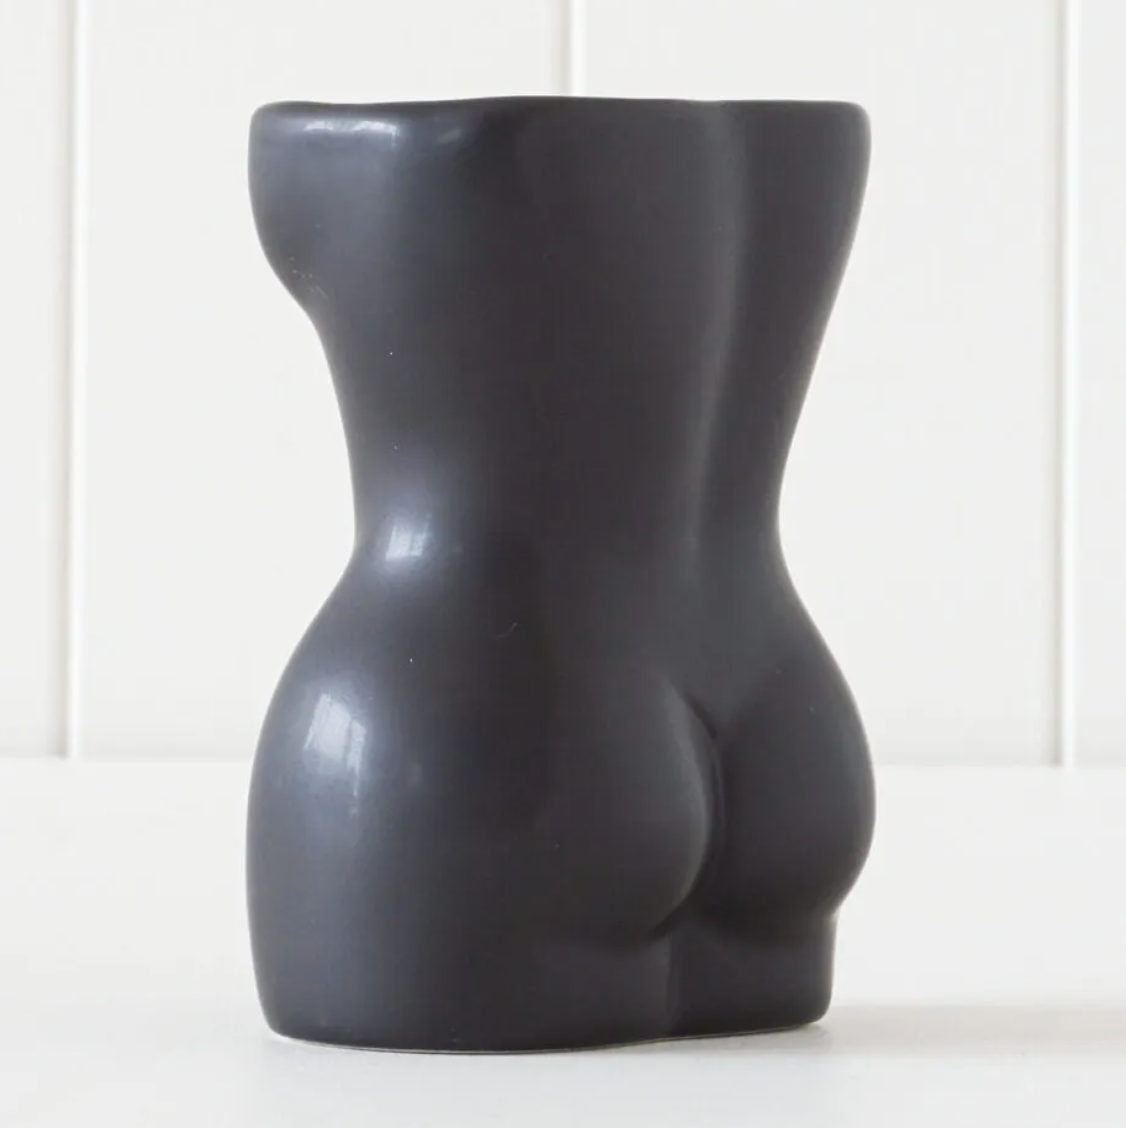 Nude goddess vase - tan or black